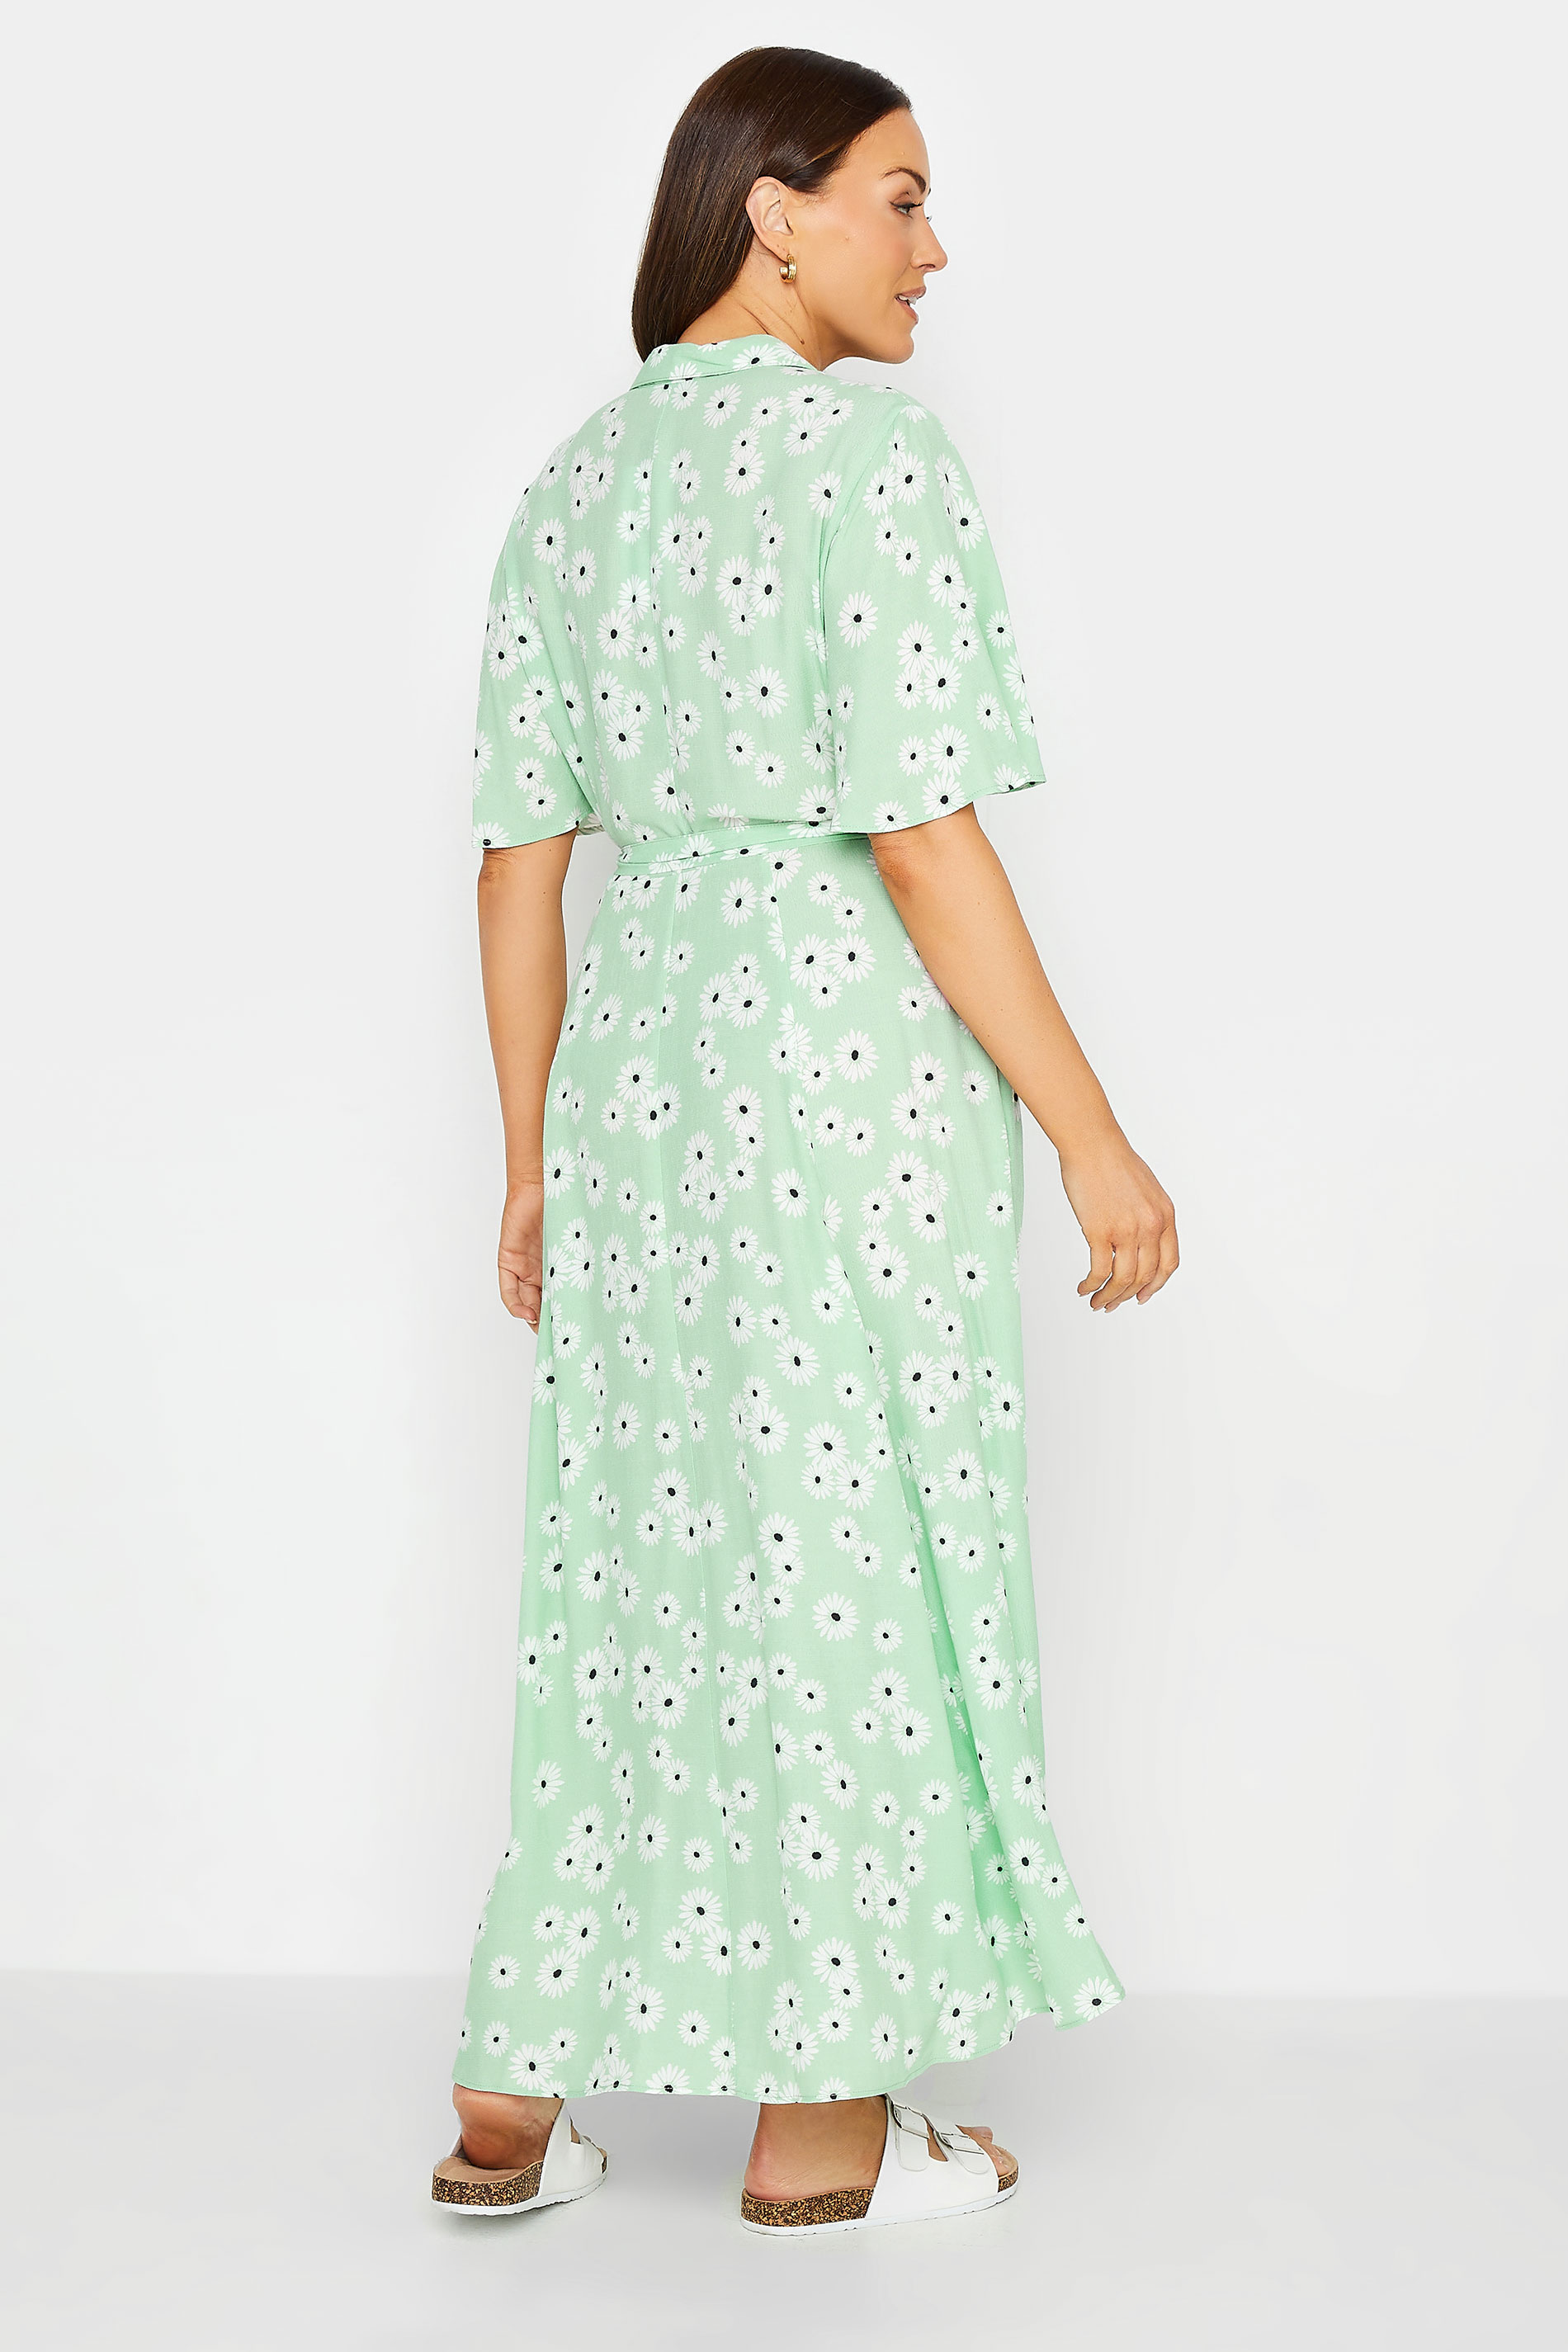 M&Co Mint Green Daisy Print Maxi Shirt Dress | M&Co 3